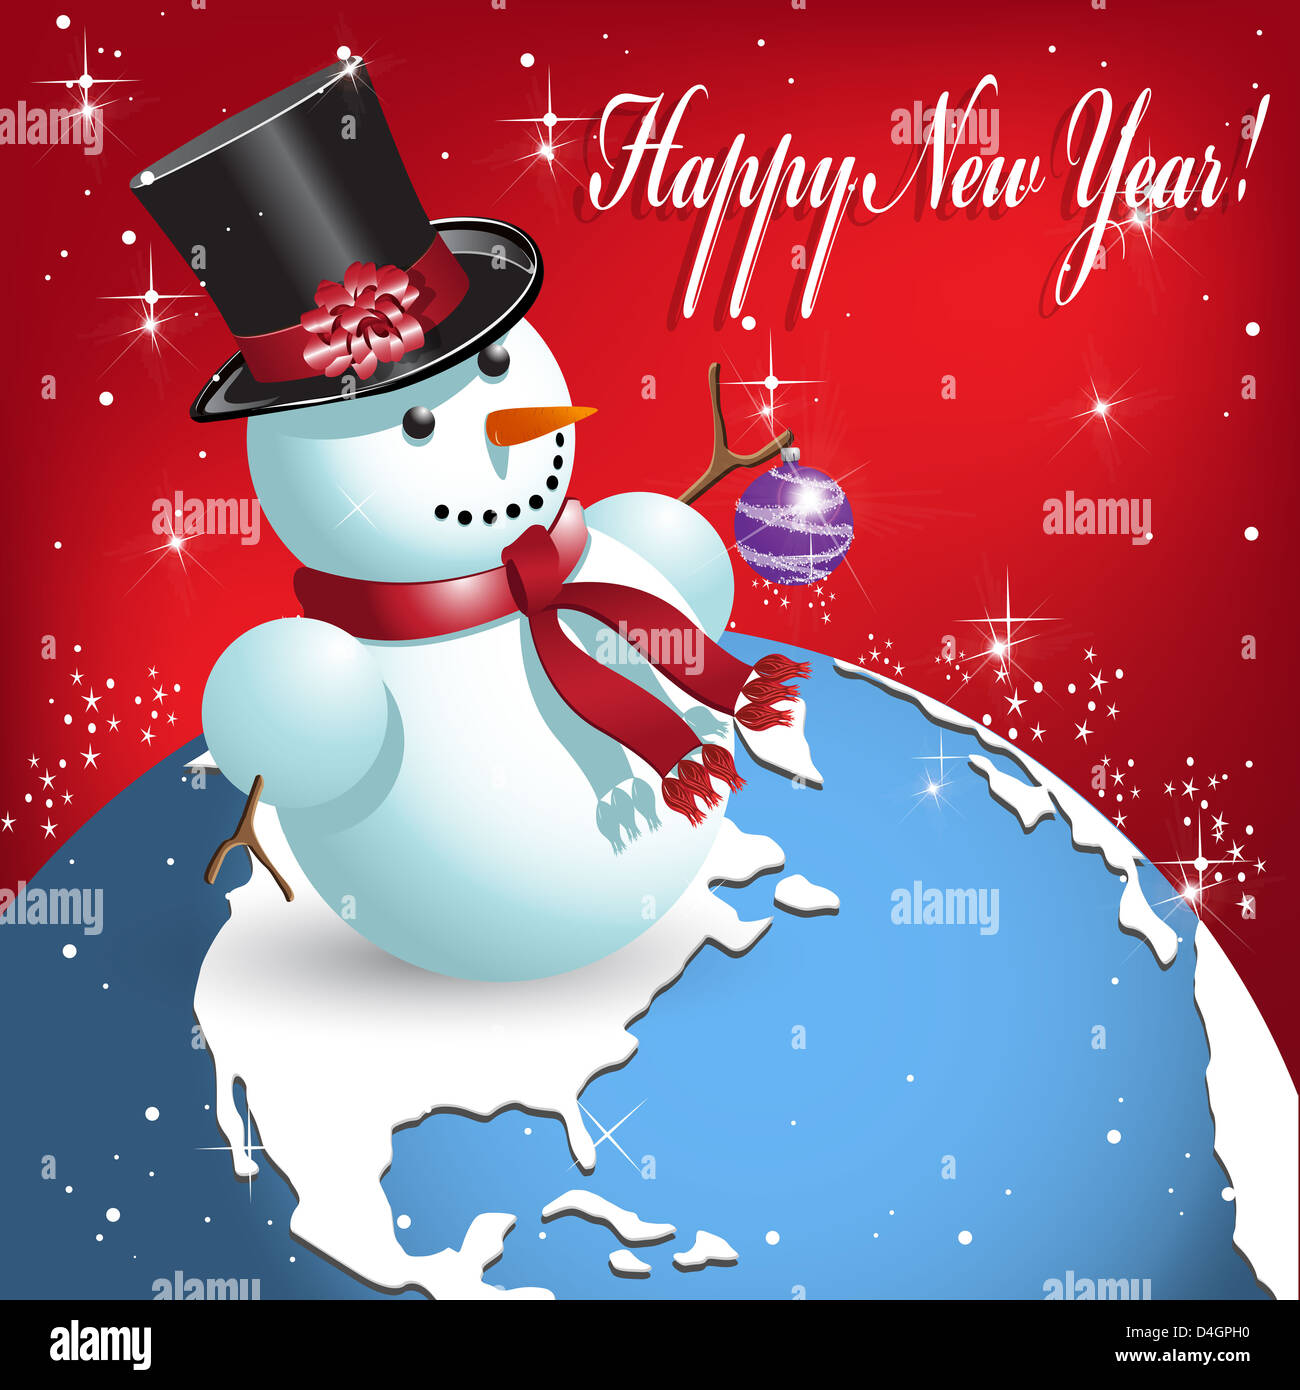 illustration, snowman on blue globe on red background Stock Photo